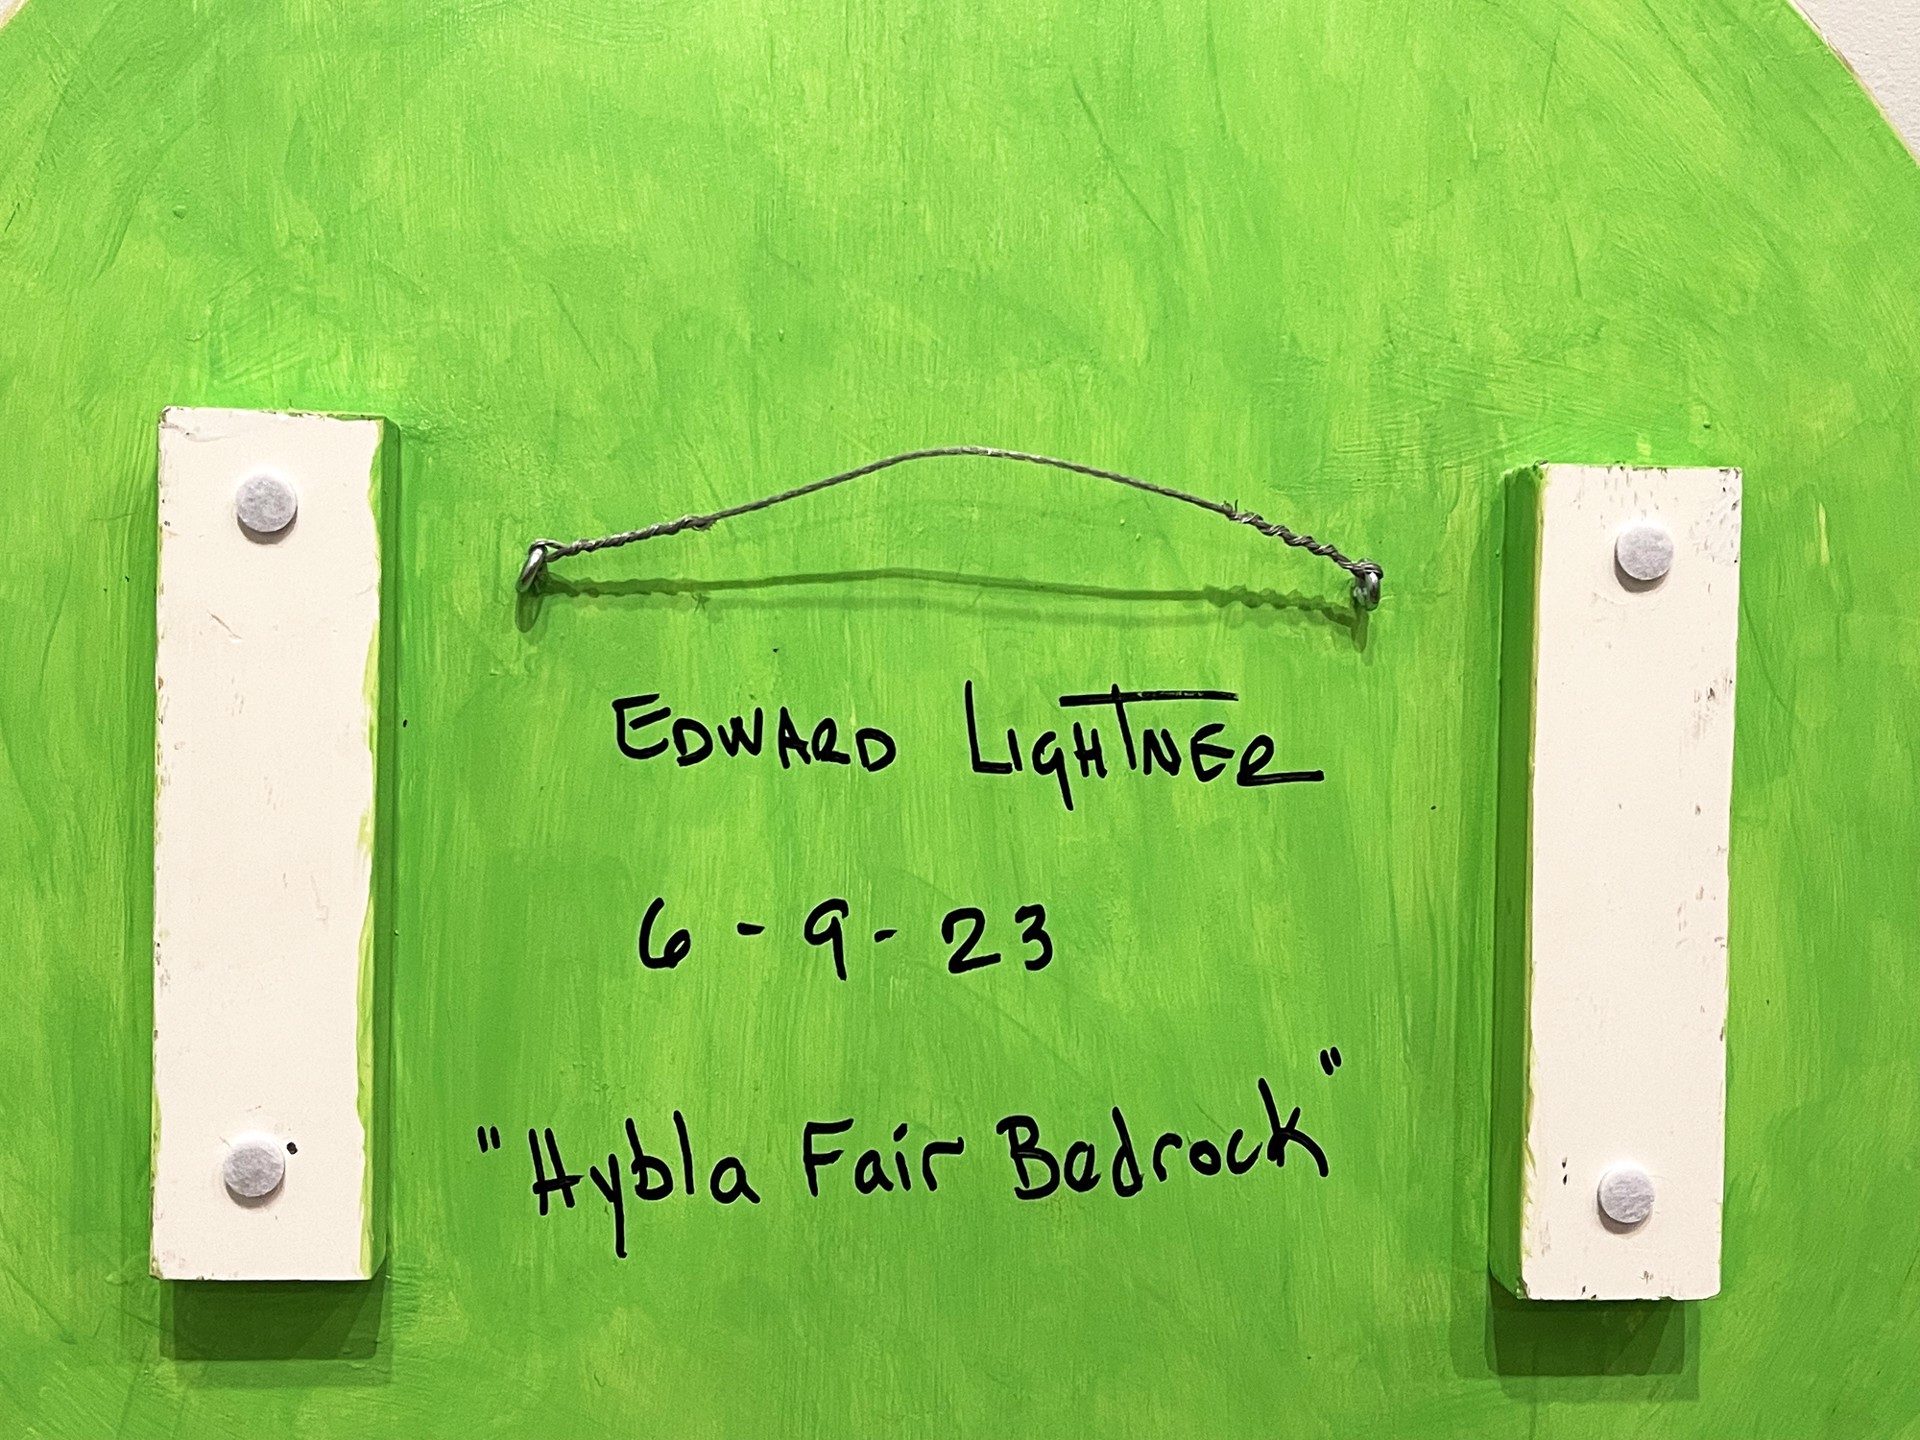 Hybla Fair Bedrock by Edward Lightner